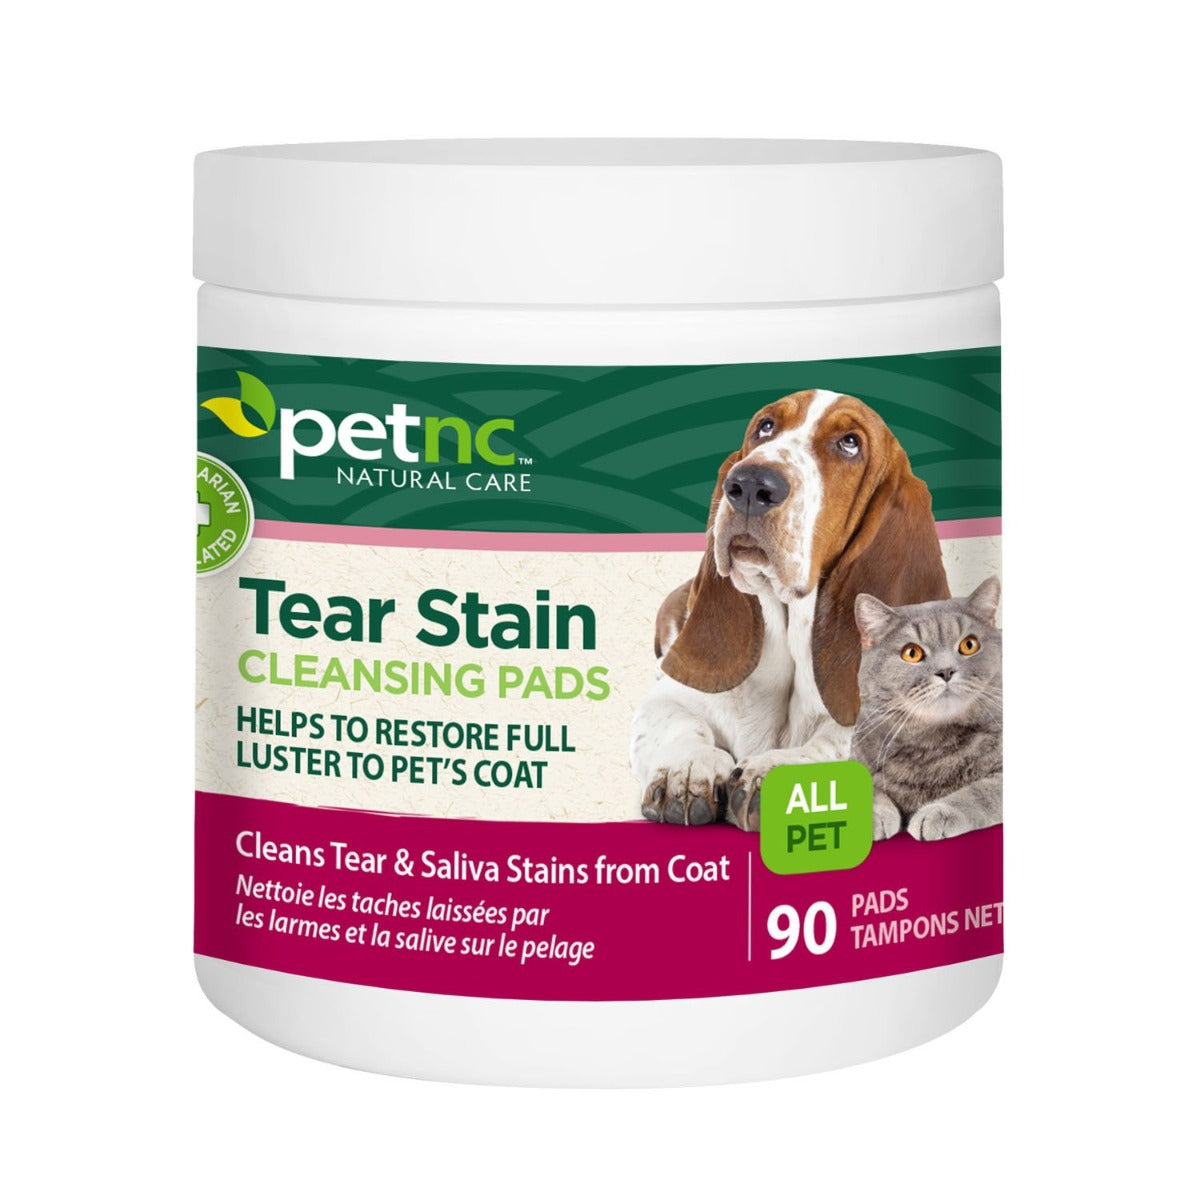 Pet clean. Petnc витамины для собак. Stain Care для собак купить. Suitable for all Cats Dogs clean Pets.